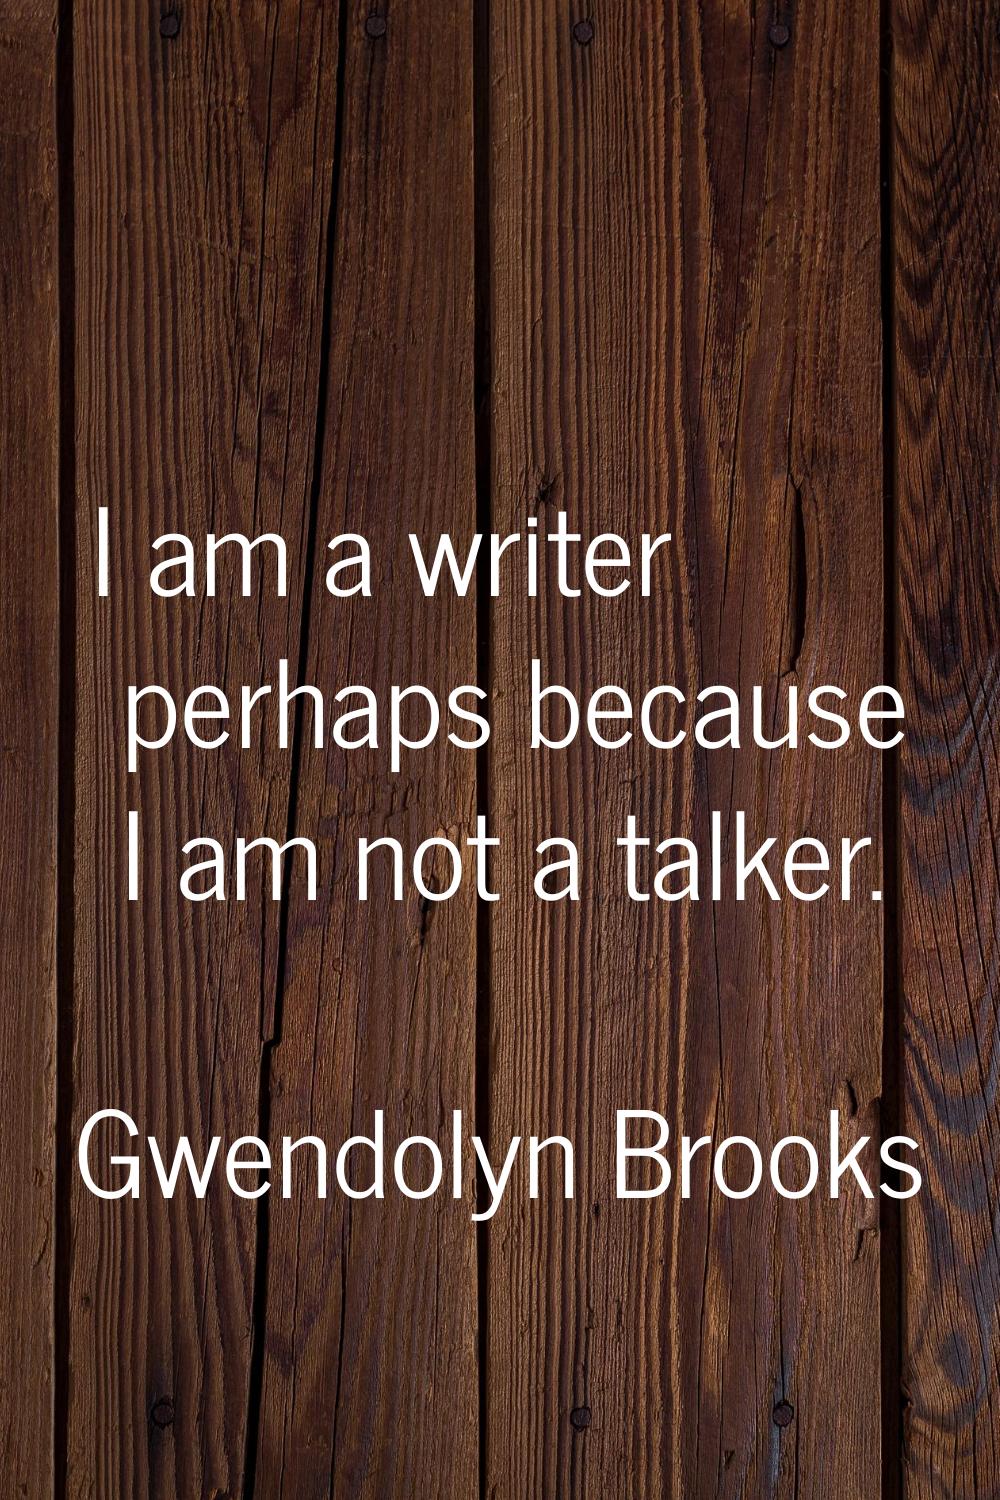 I am a writer perhaps because I am not a talker.